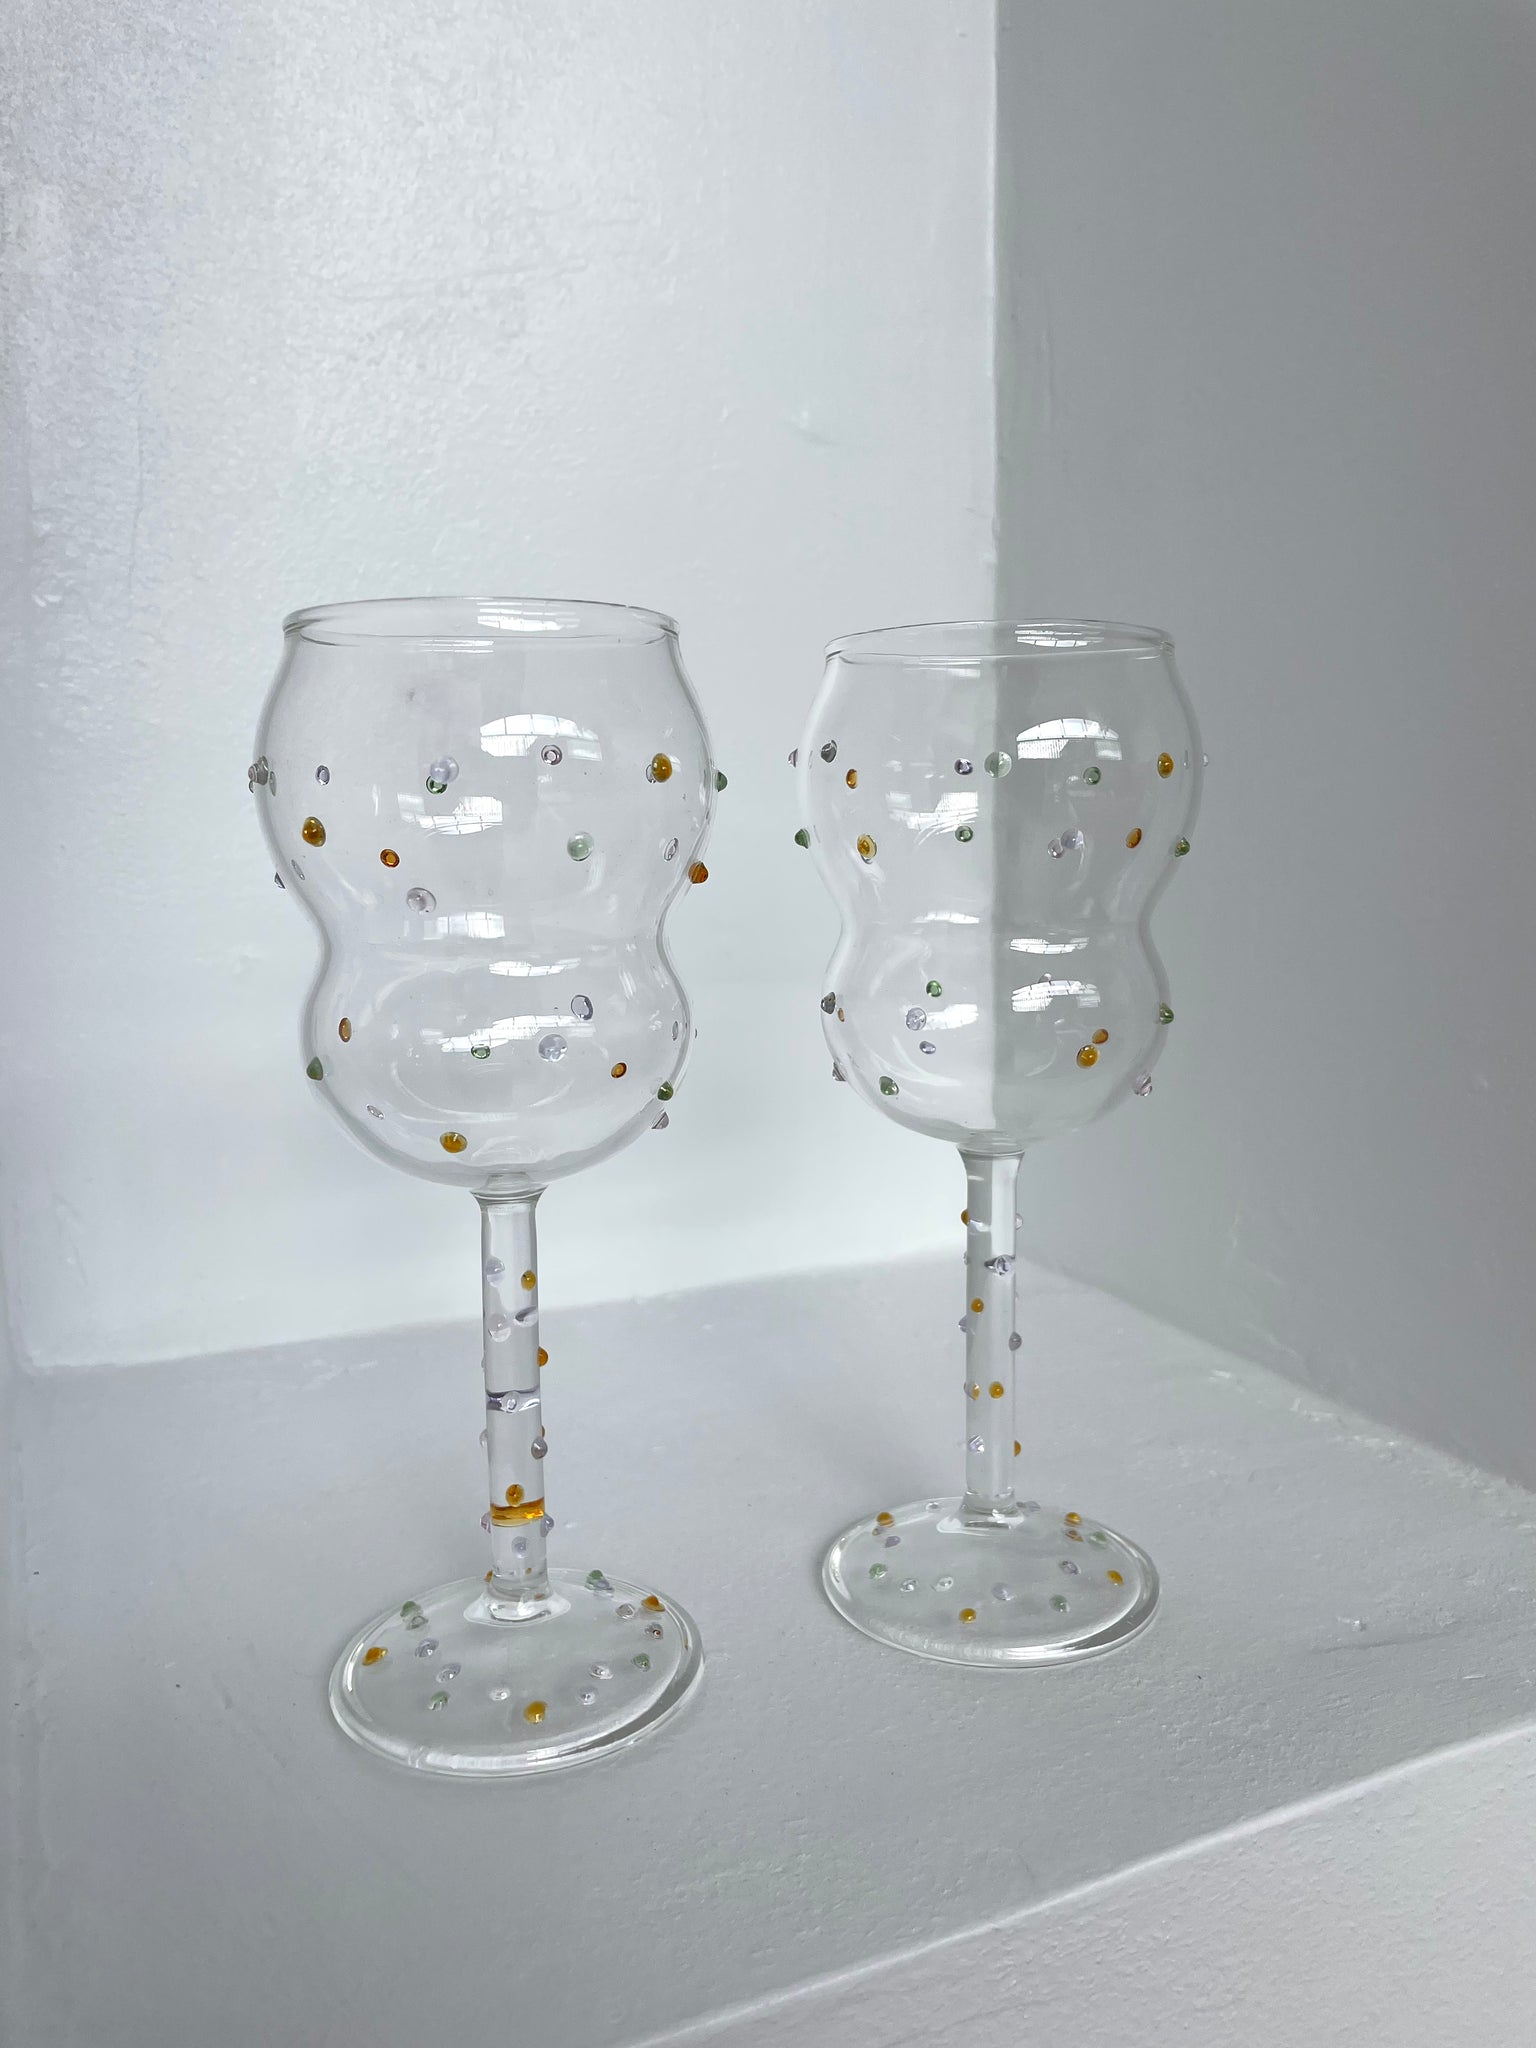 IRIDESCENT GLASS WAVY CUP – Ri-Ri-Ku